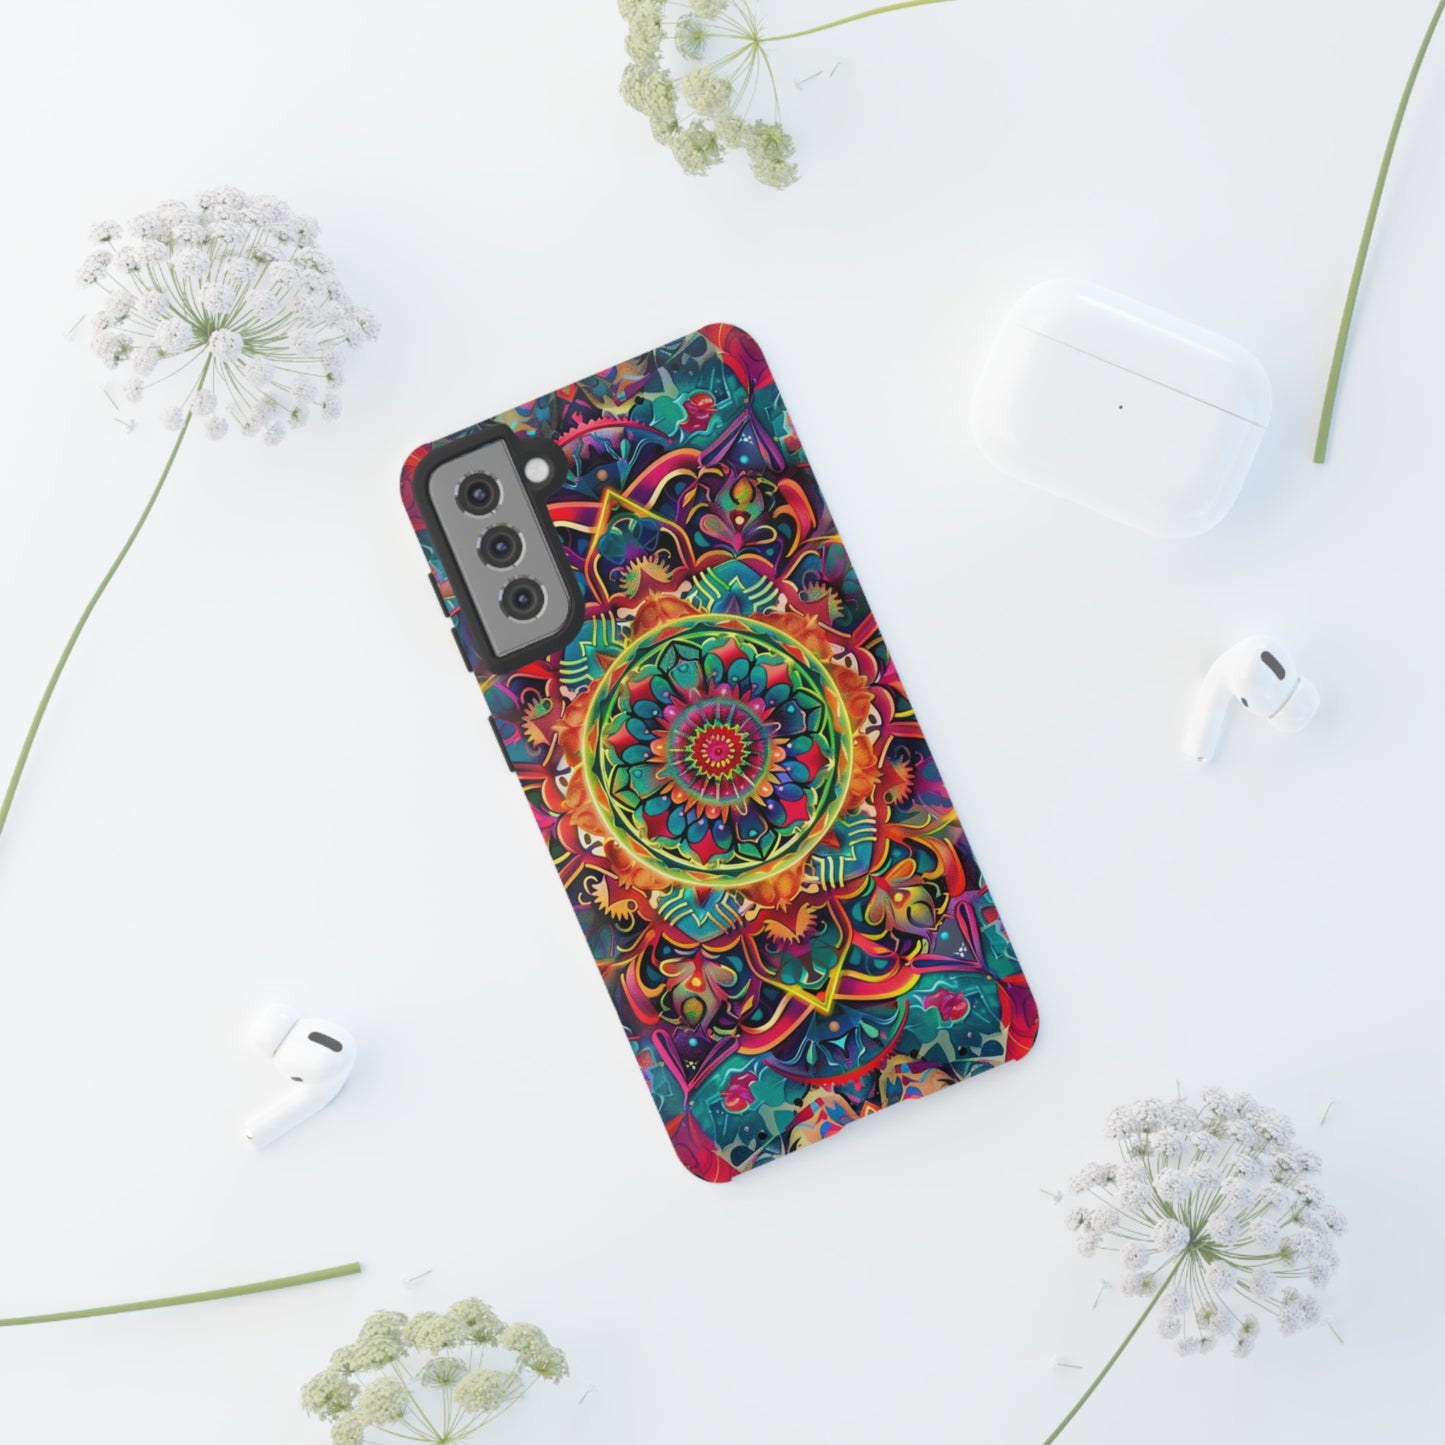 Cosmic Stained Glass Mandala Phone Case